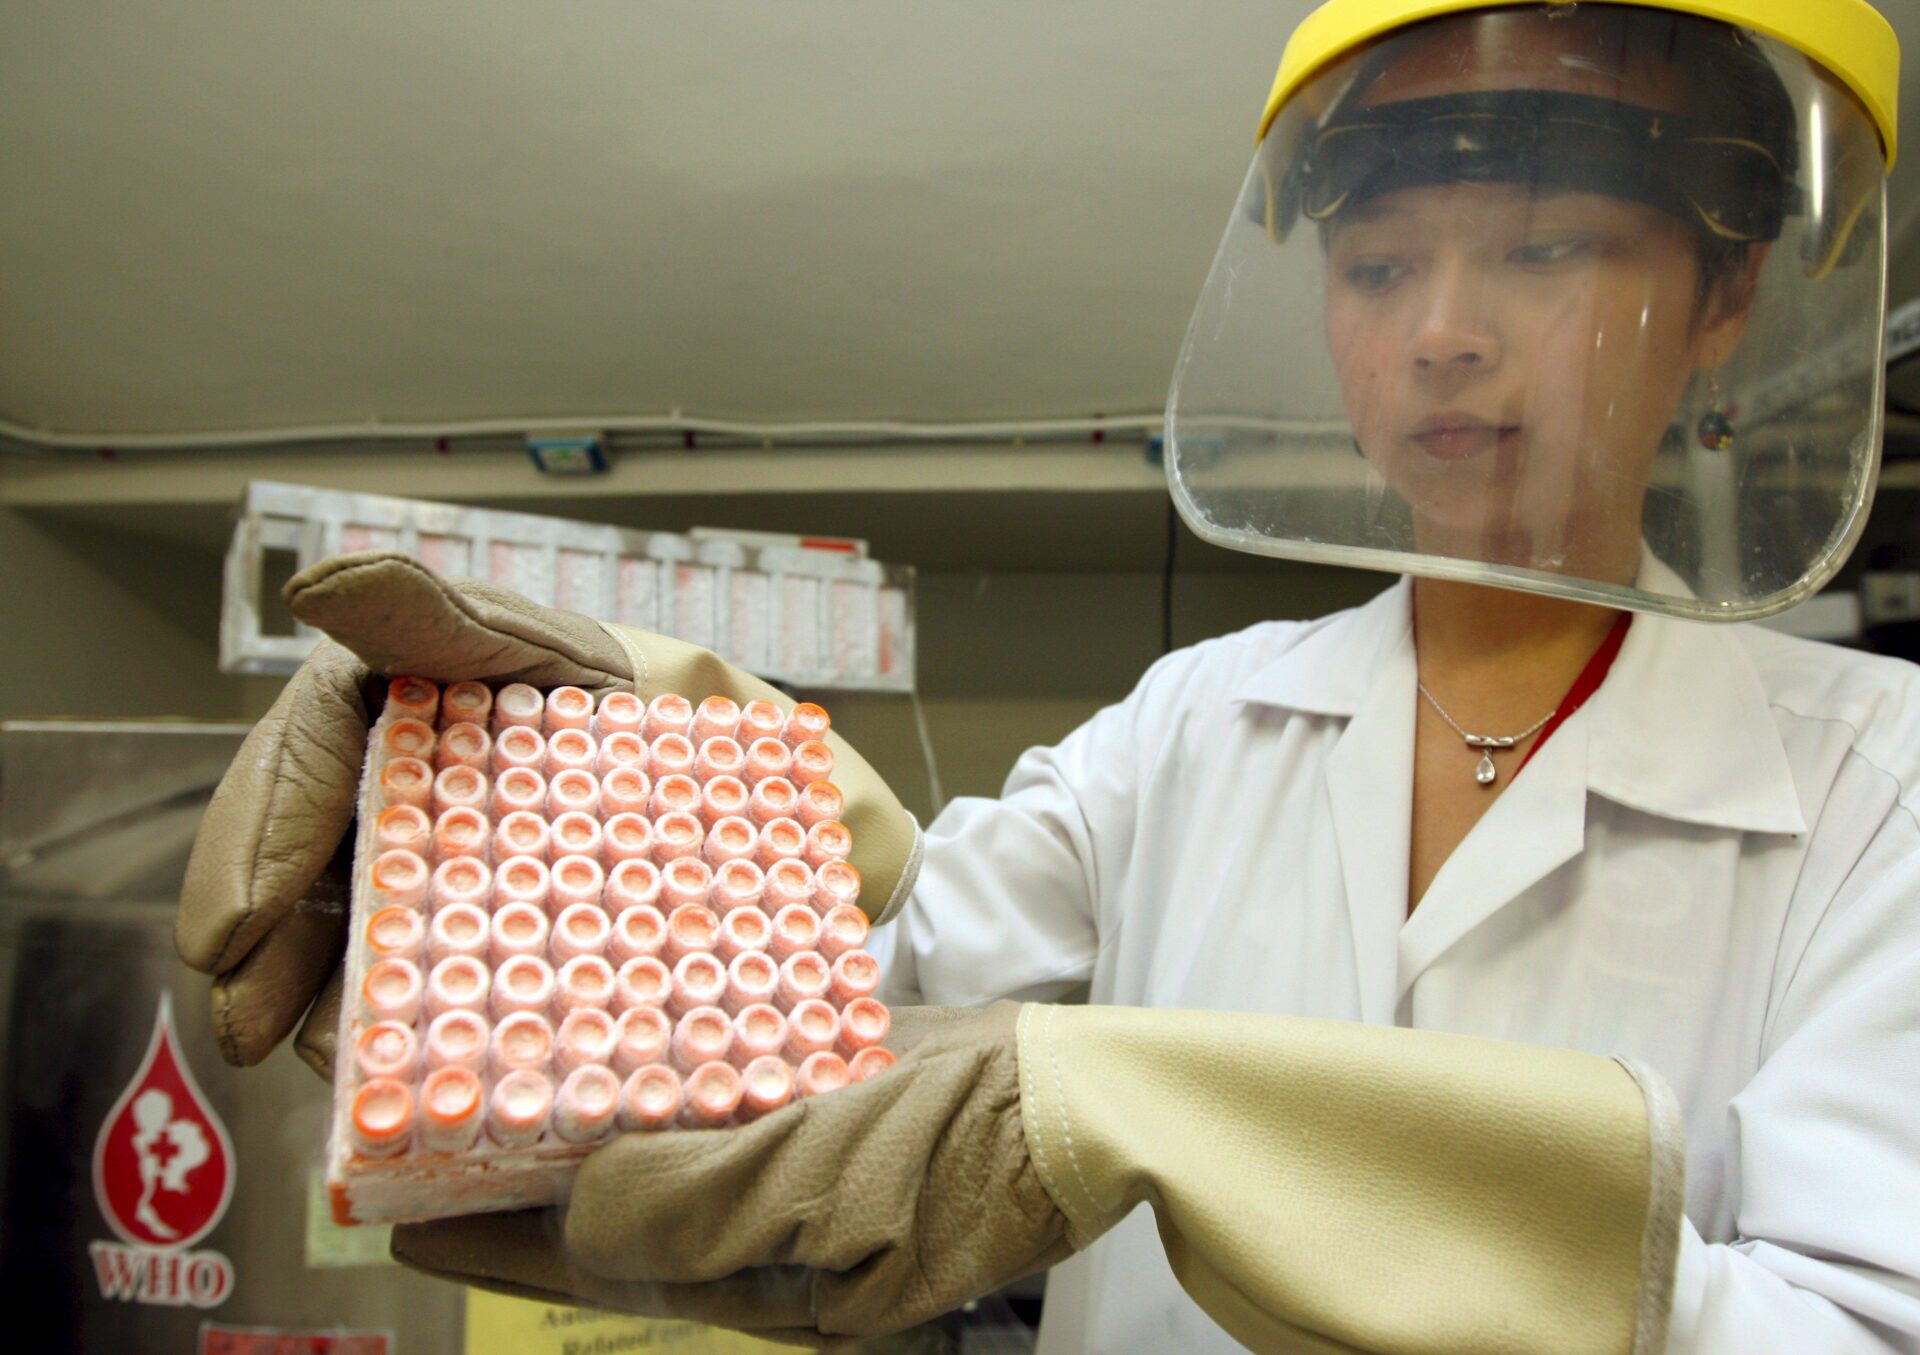 EU registra posible caso de éxito contra el VIH gracias a células madre